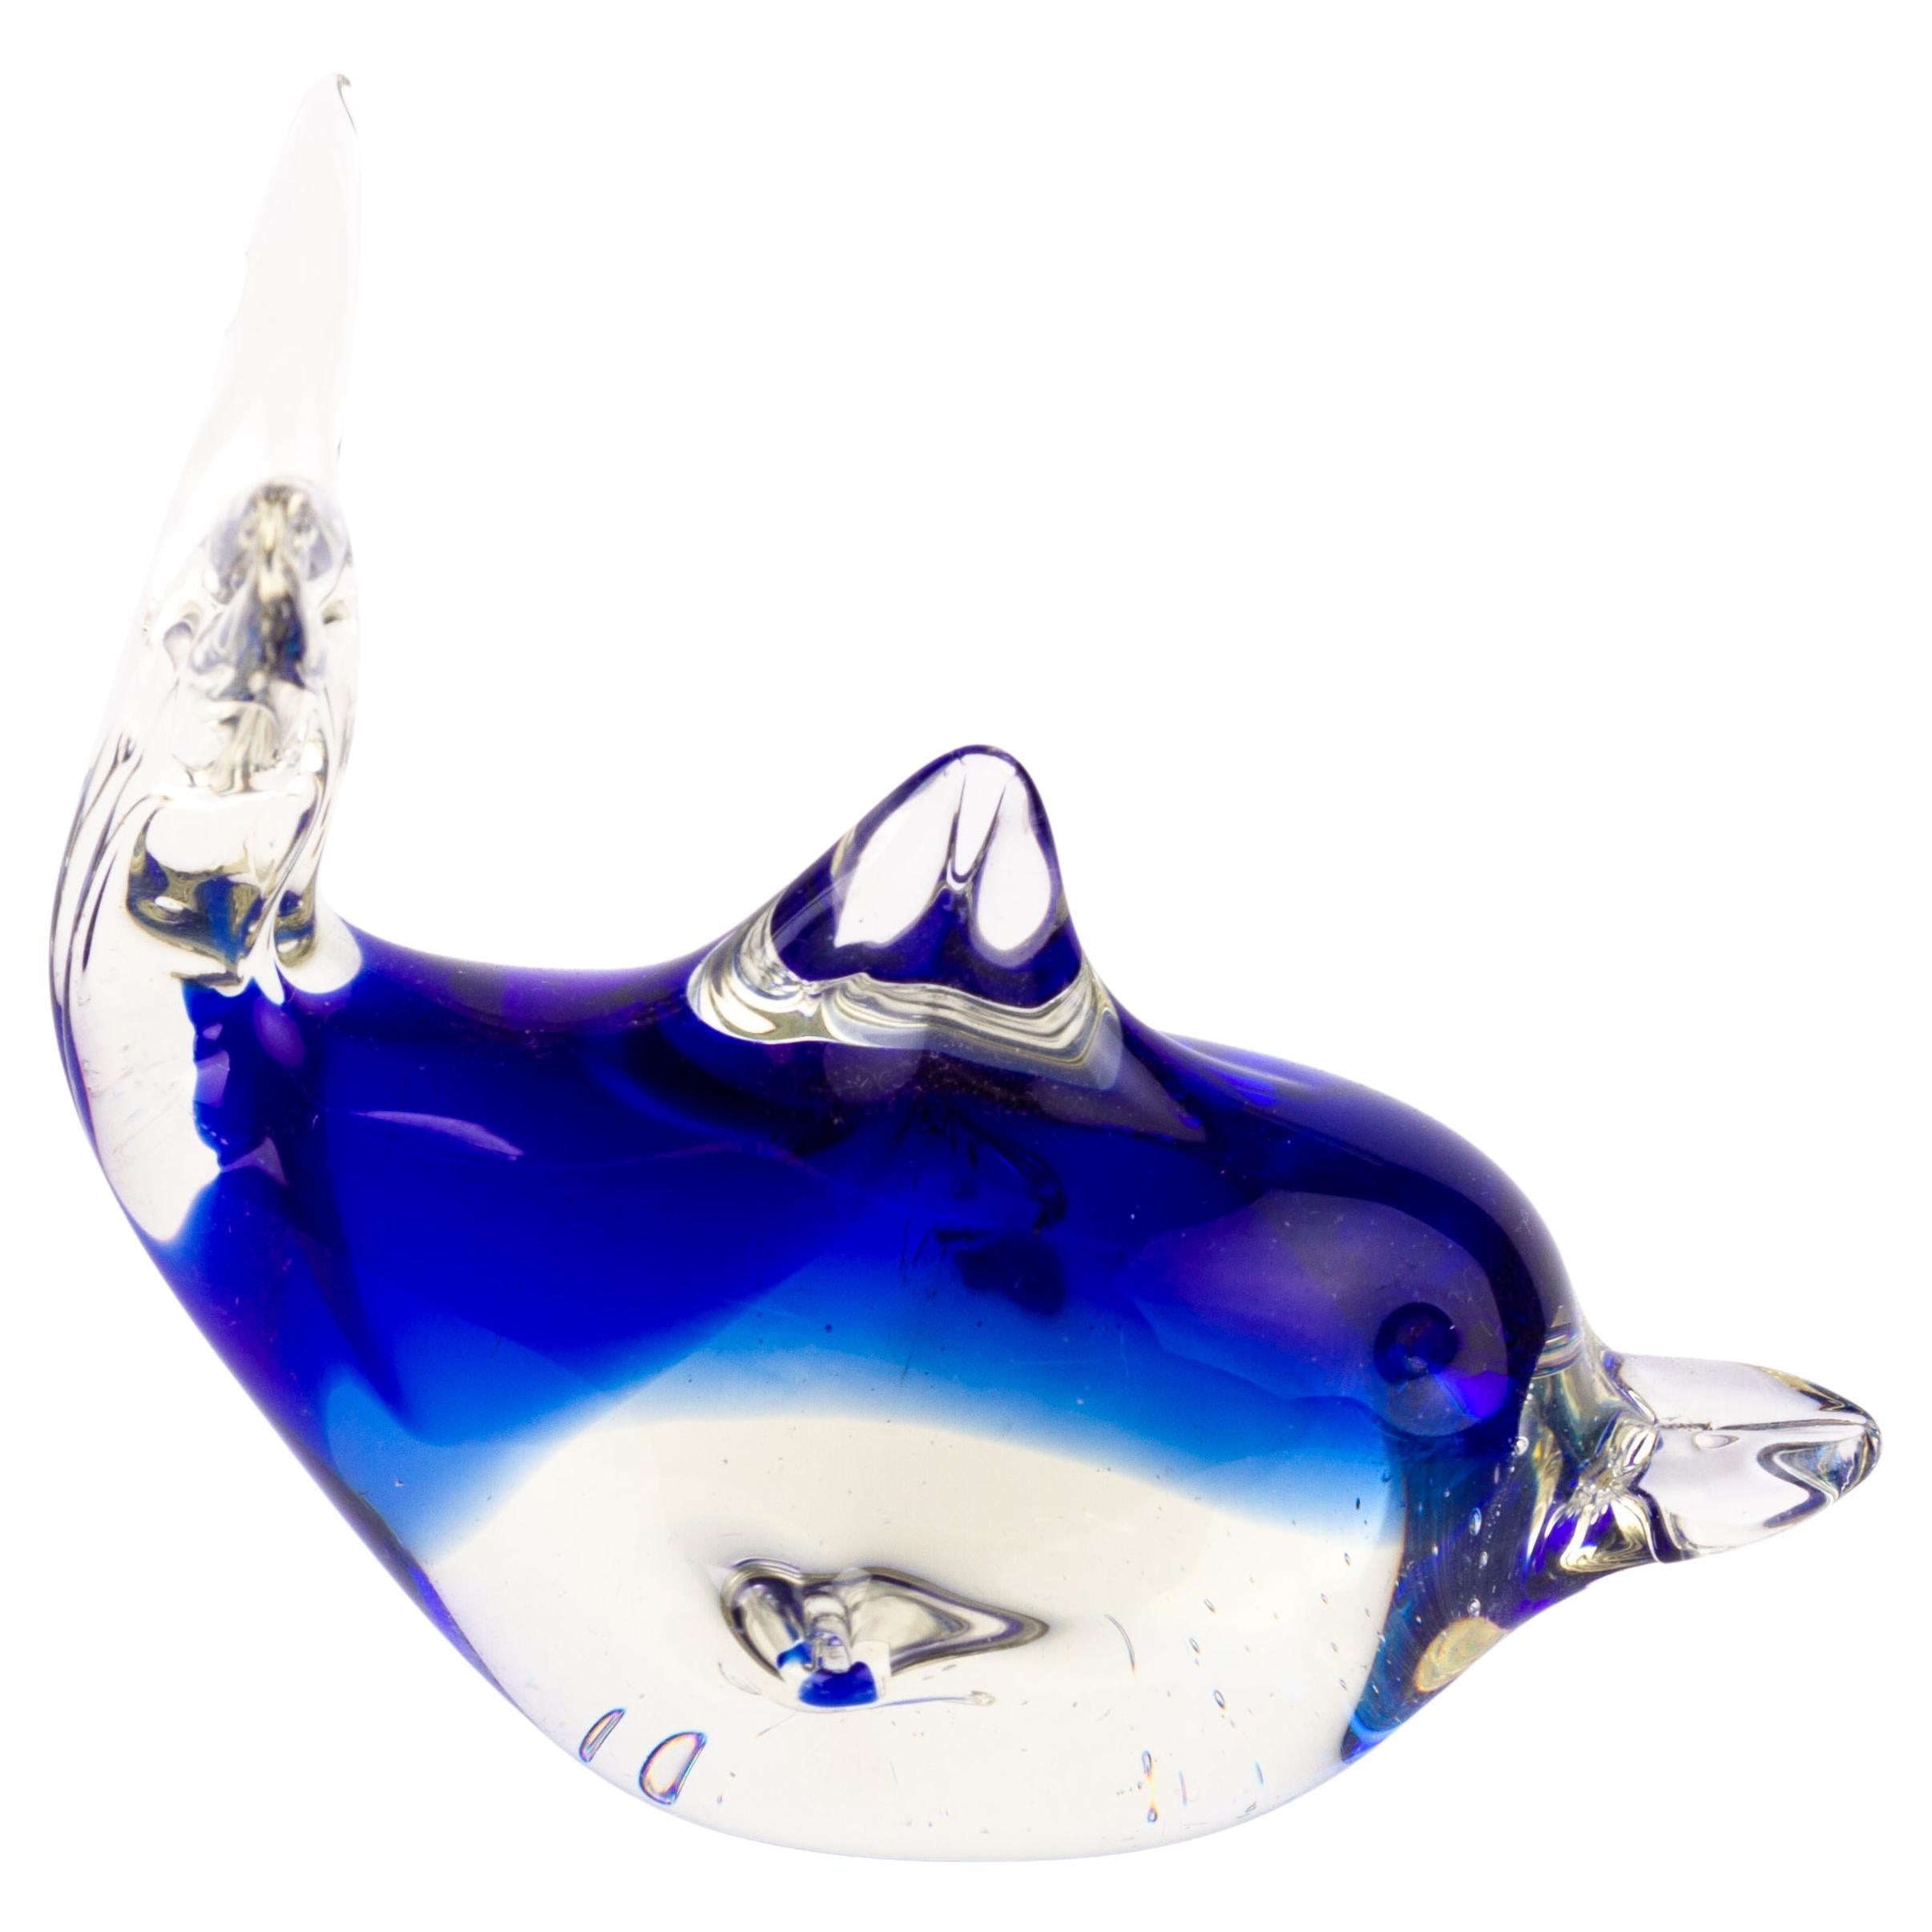 Murano Venetian Glass Designer Sculpture Fish 